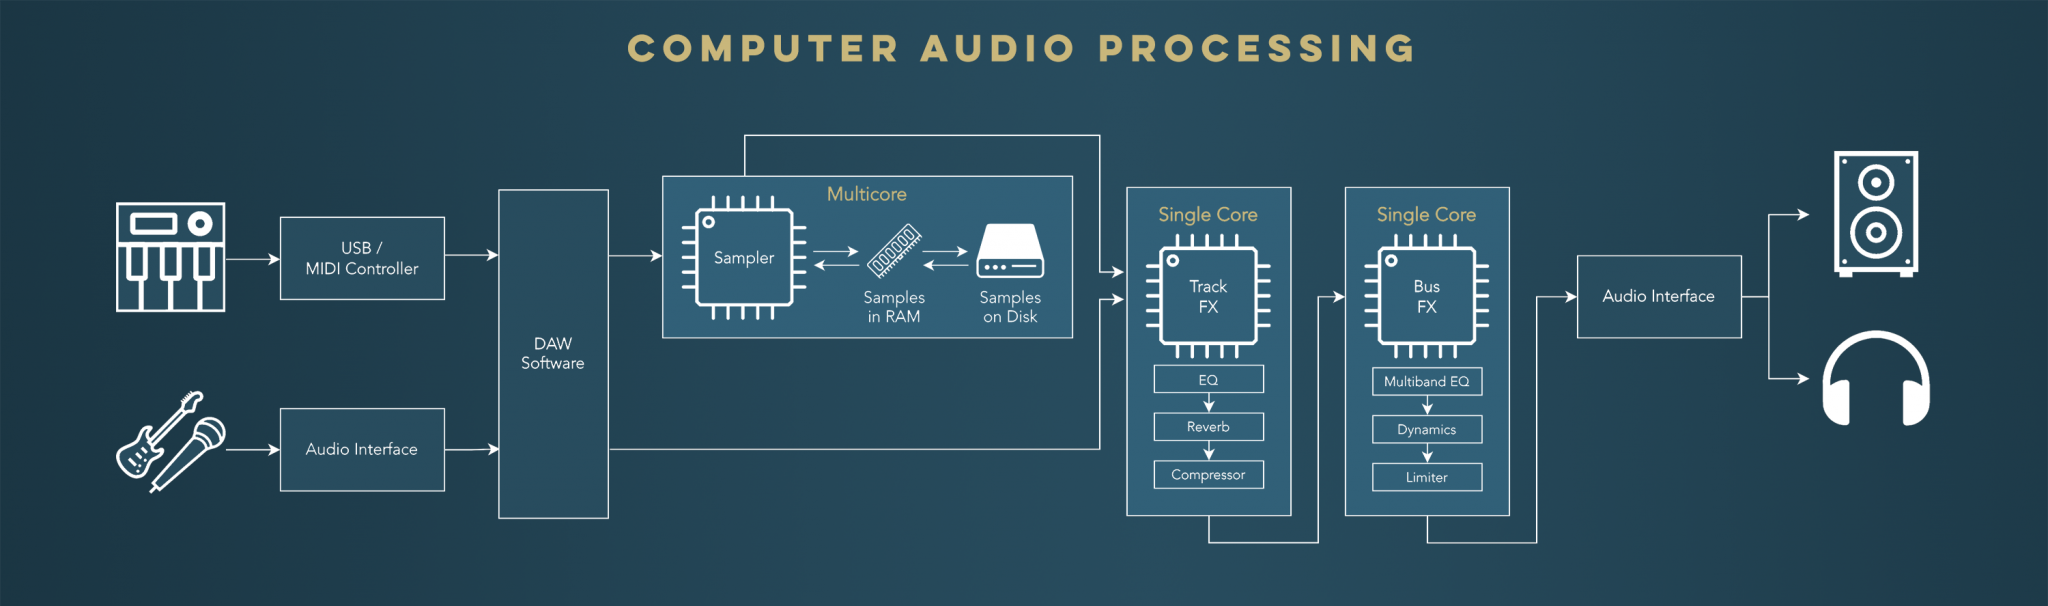 Computer-Audio-Processing-Diagram-2048x606.png